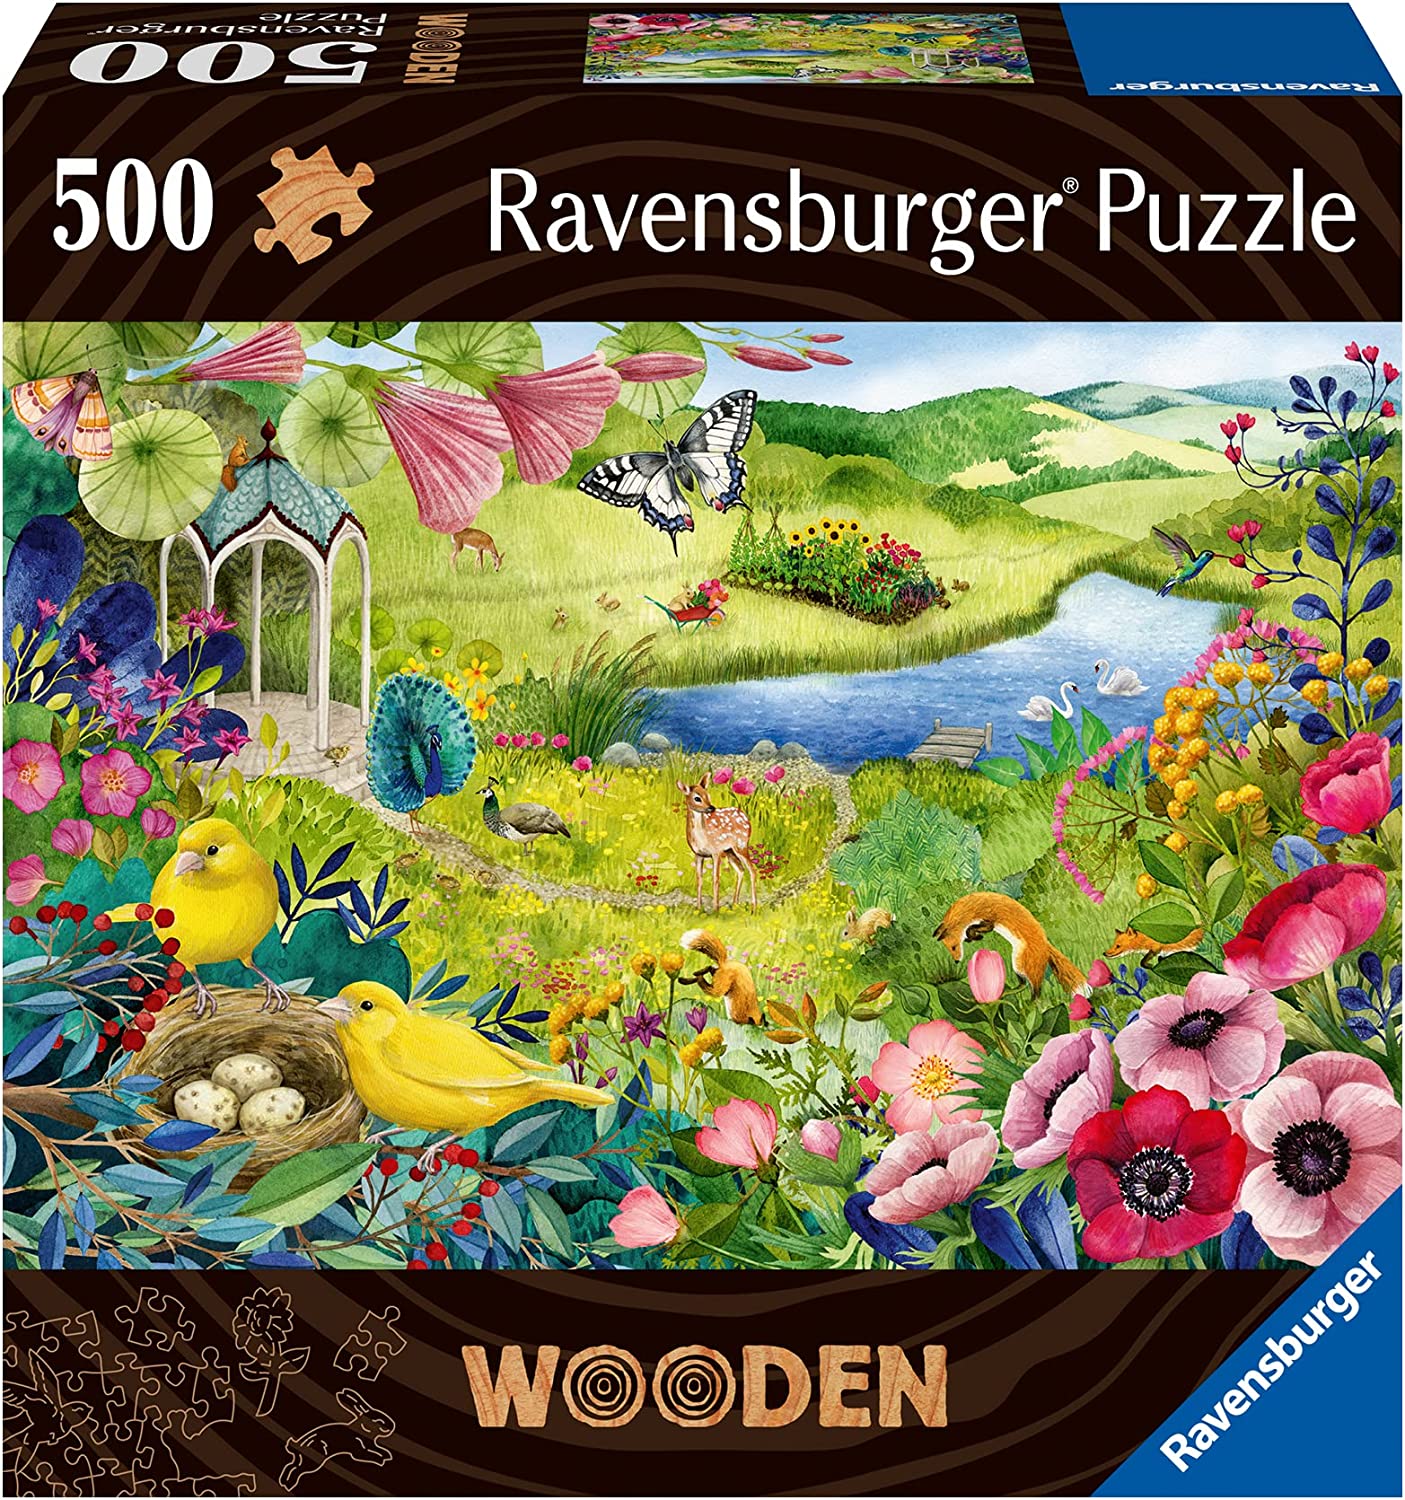 WOODEN - A Kertben - FA kirakó! Ravensburger 500 darabos kirakó puzzle (RA-17513 4005556175130) - puzzlegarden